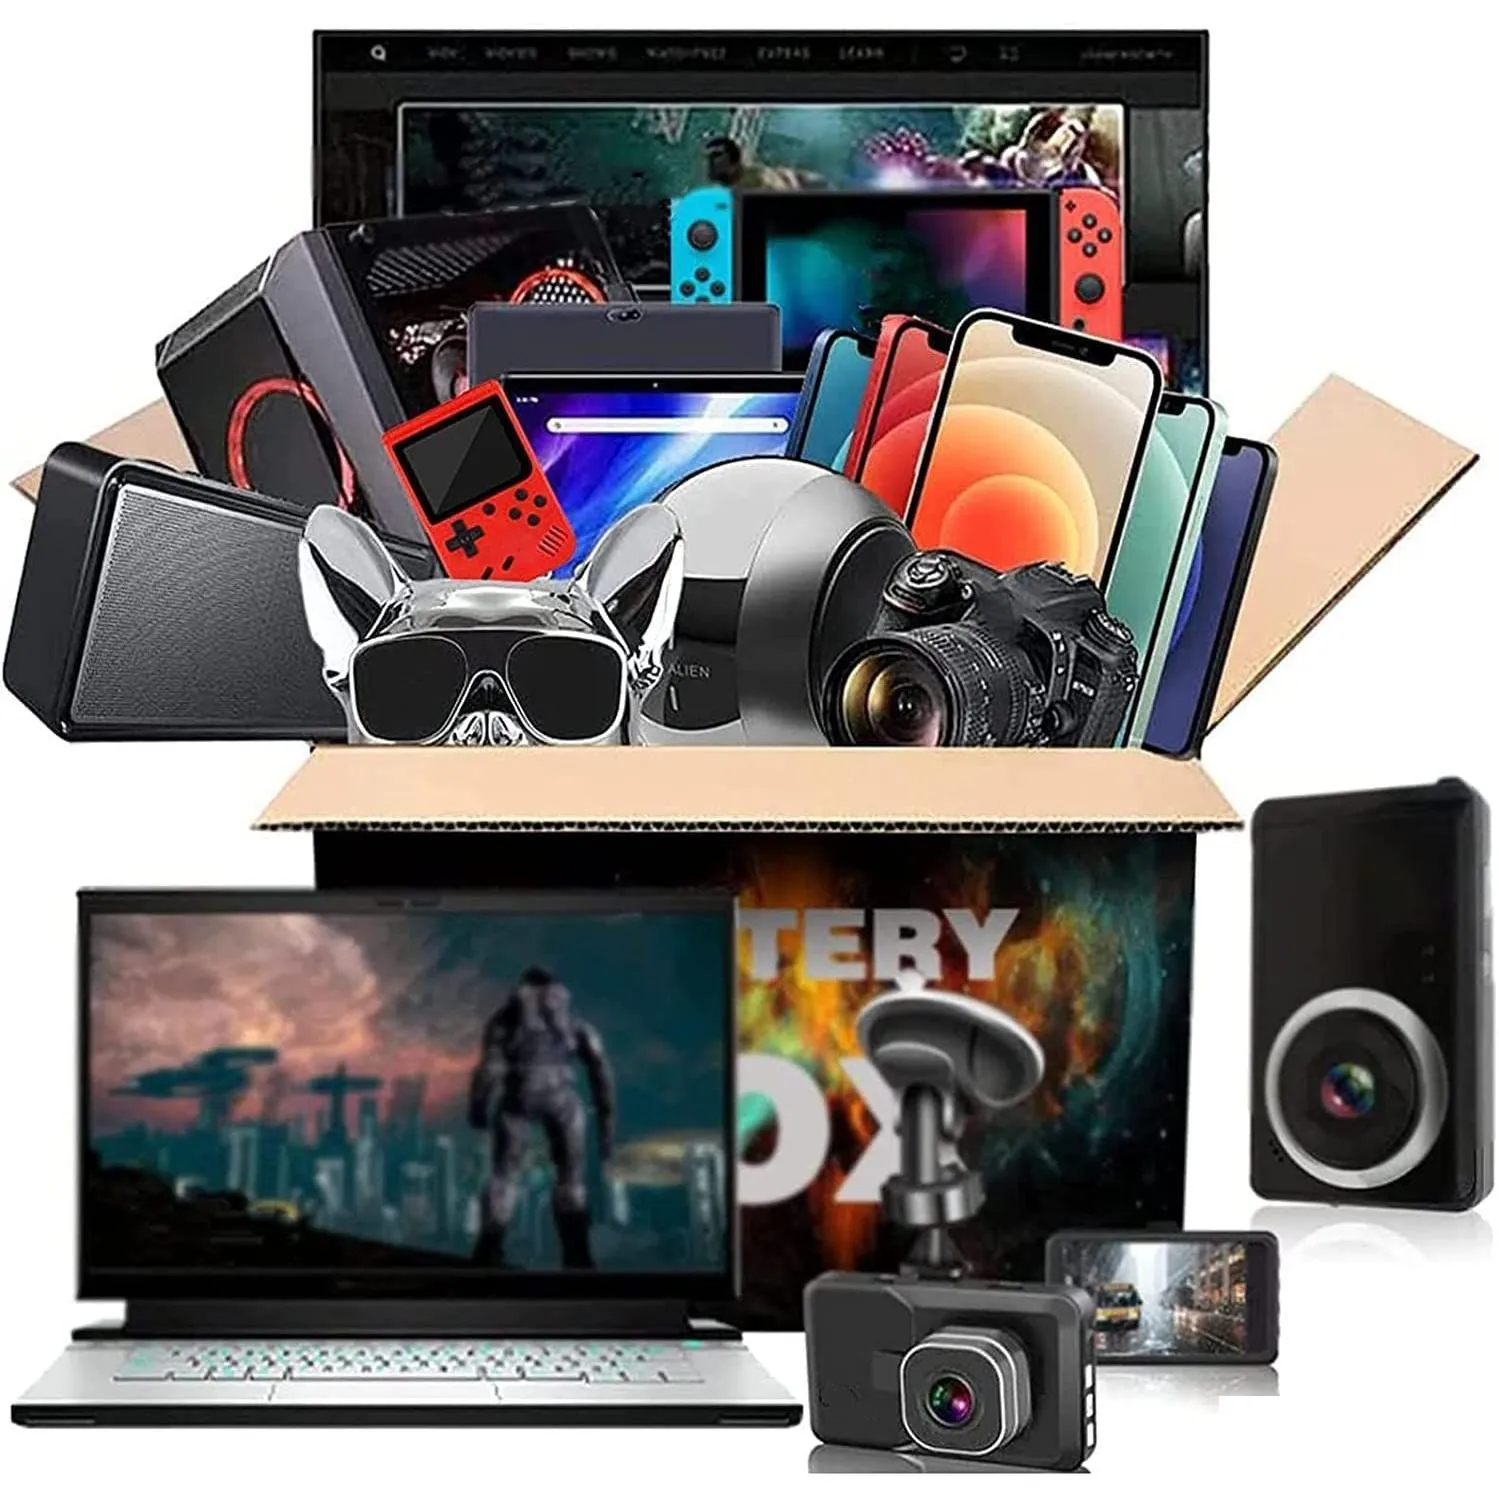 Smart Devices Lucky Mystery Boxs Digital Electronics наушники аксессуары для сотовых телефонов камеры Gamepads Drop Deliver Dhwpj